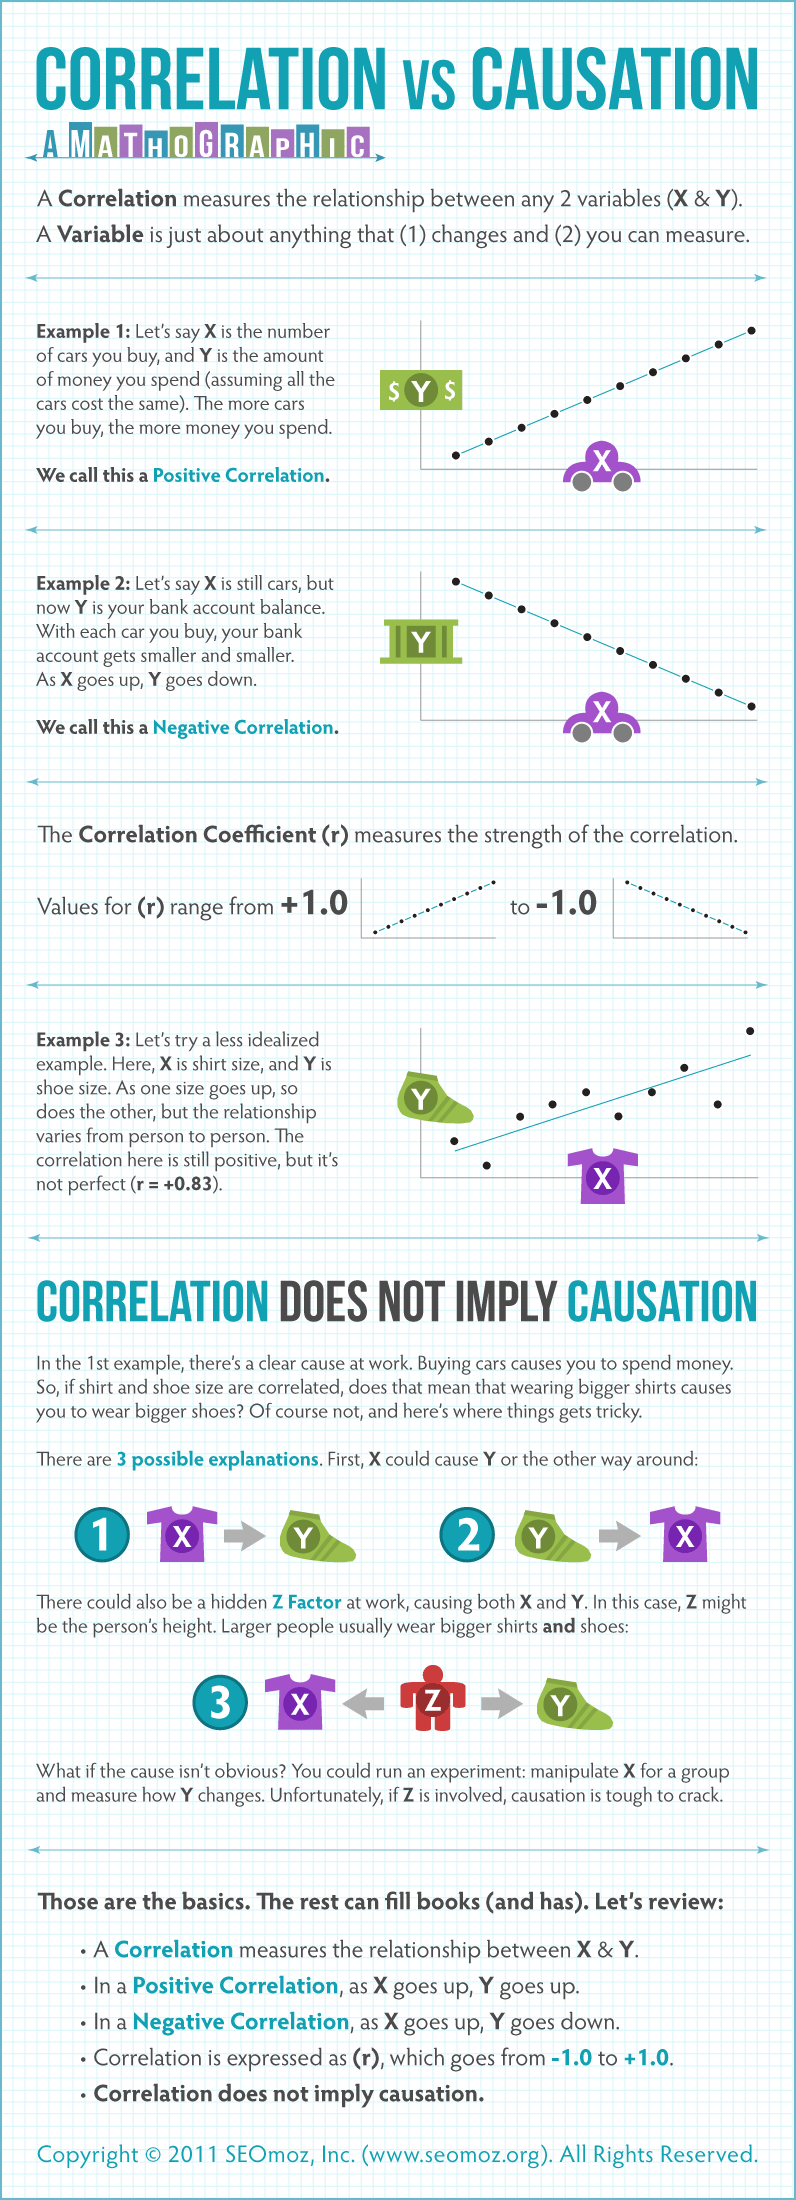 Correlation vs. Causation (A Mathographic) Infographic